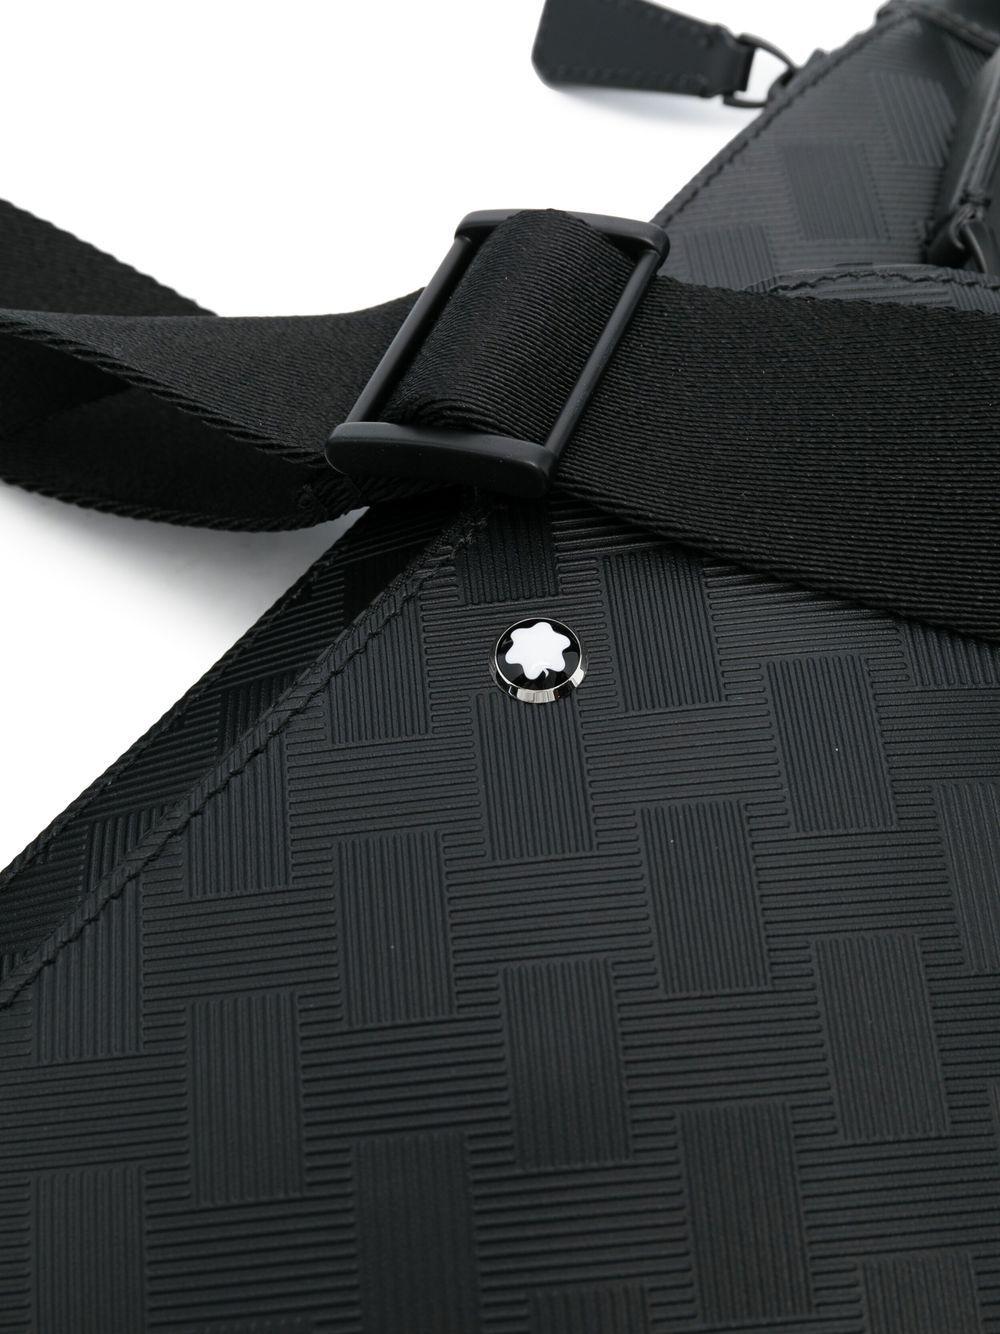 Montblanc Extreme 3.0 Men's bag, Leather, Black, Zip, 129971 - Iguana Sell